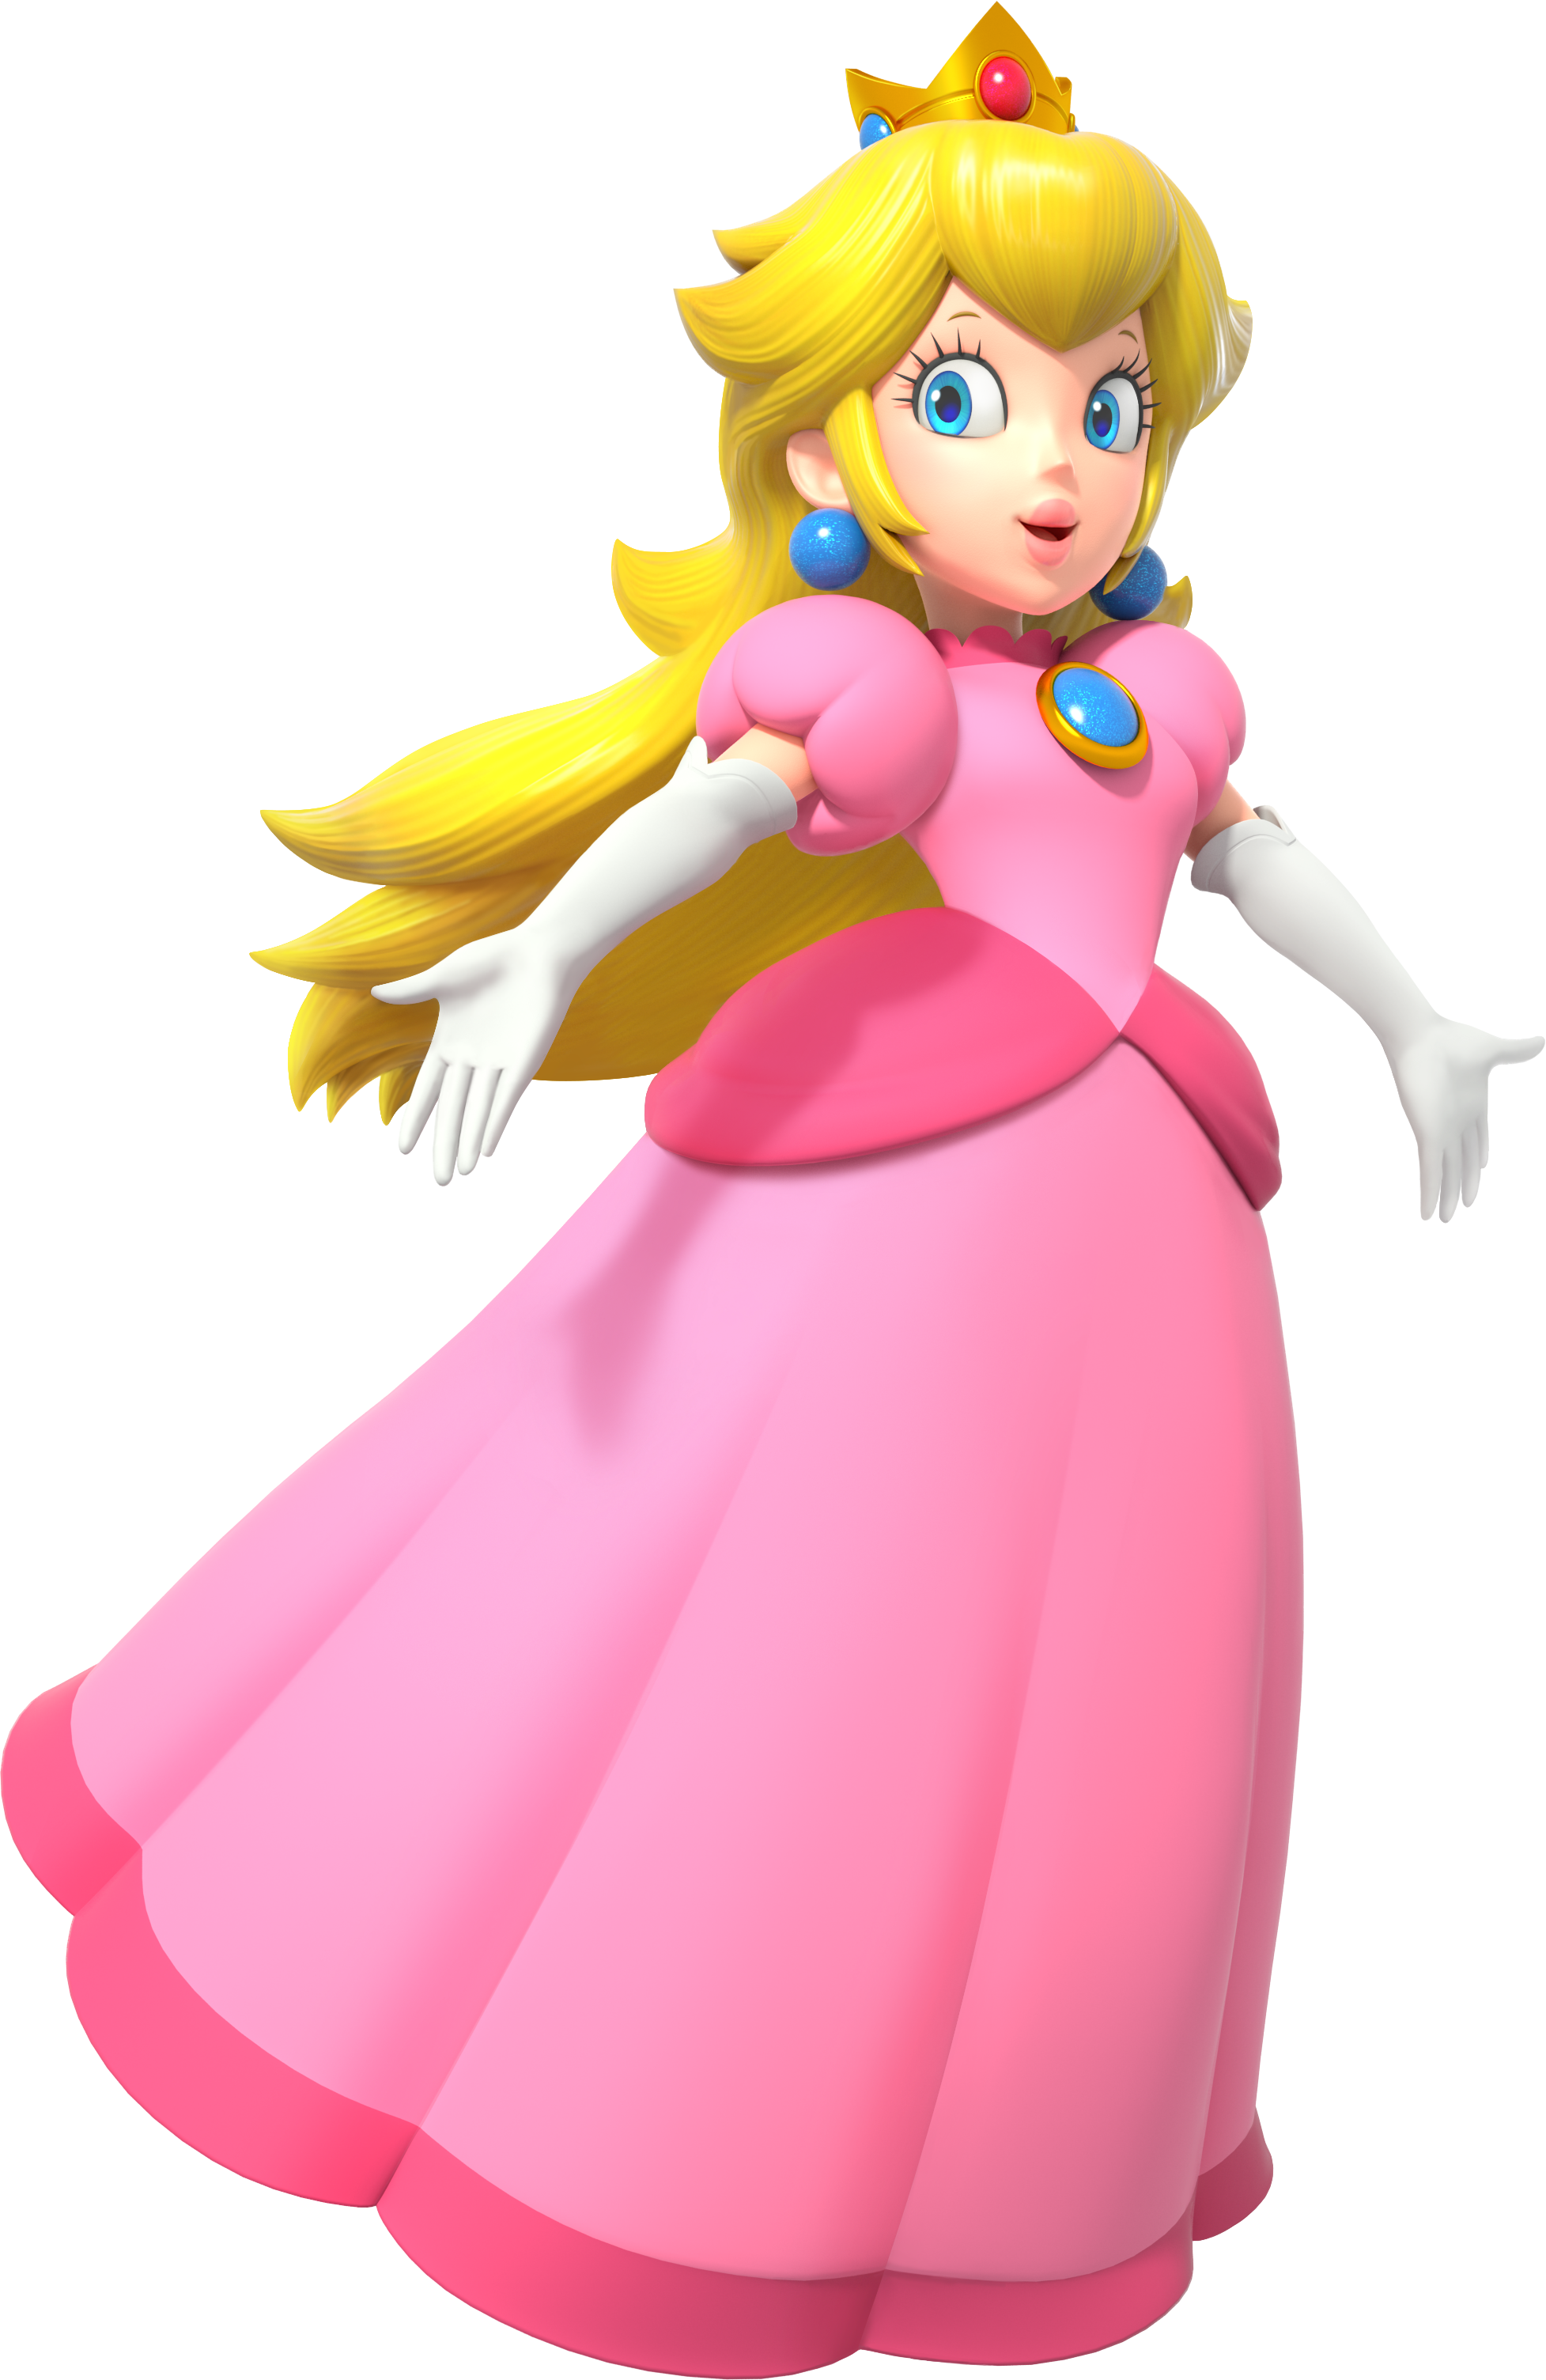 Princess Peach | Nintendo | FANDOM powered by Wikia